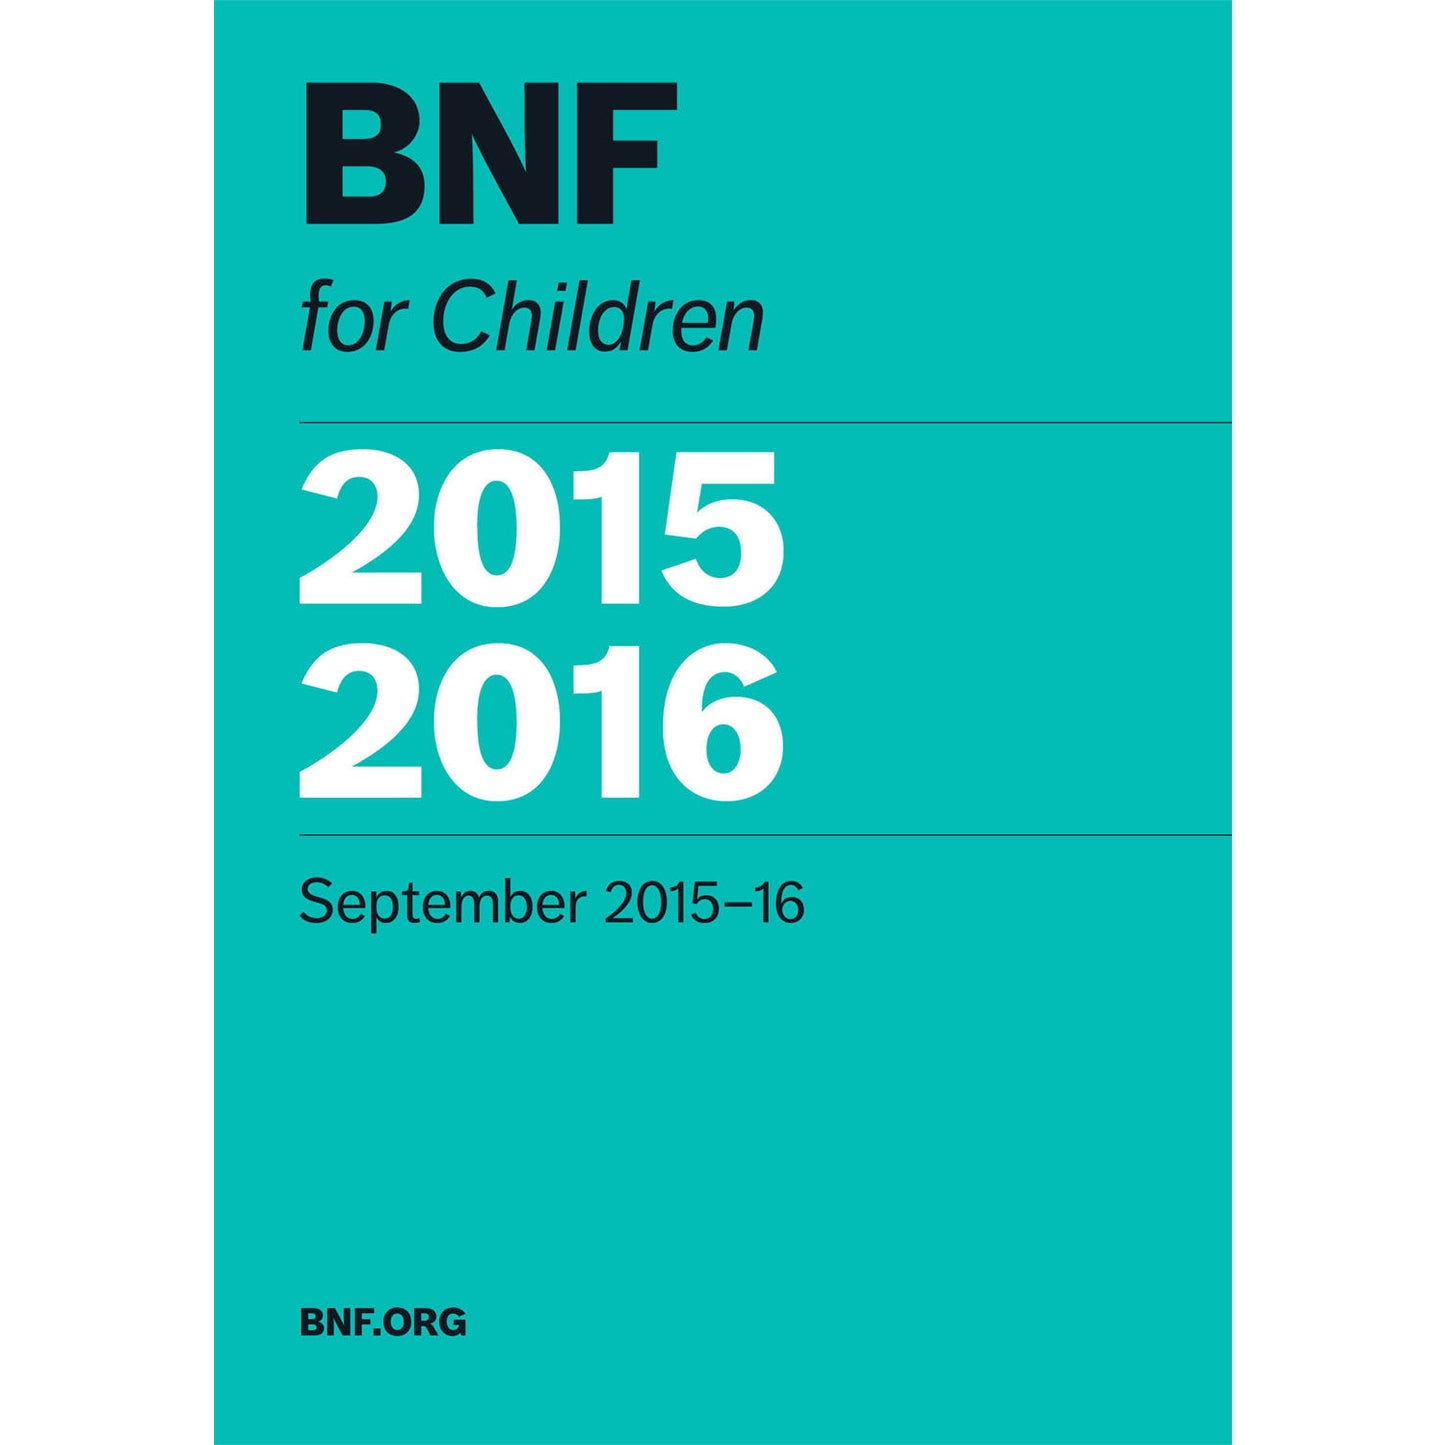 British National Formulary for Children